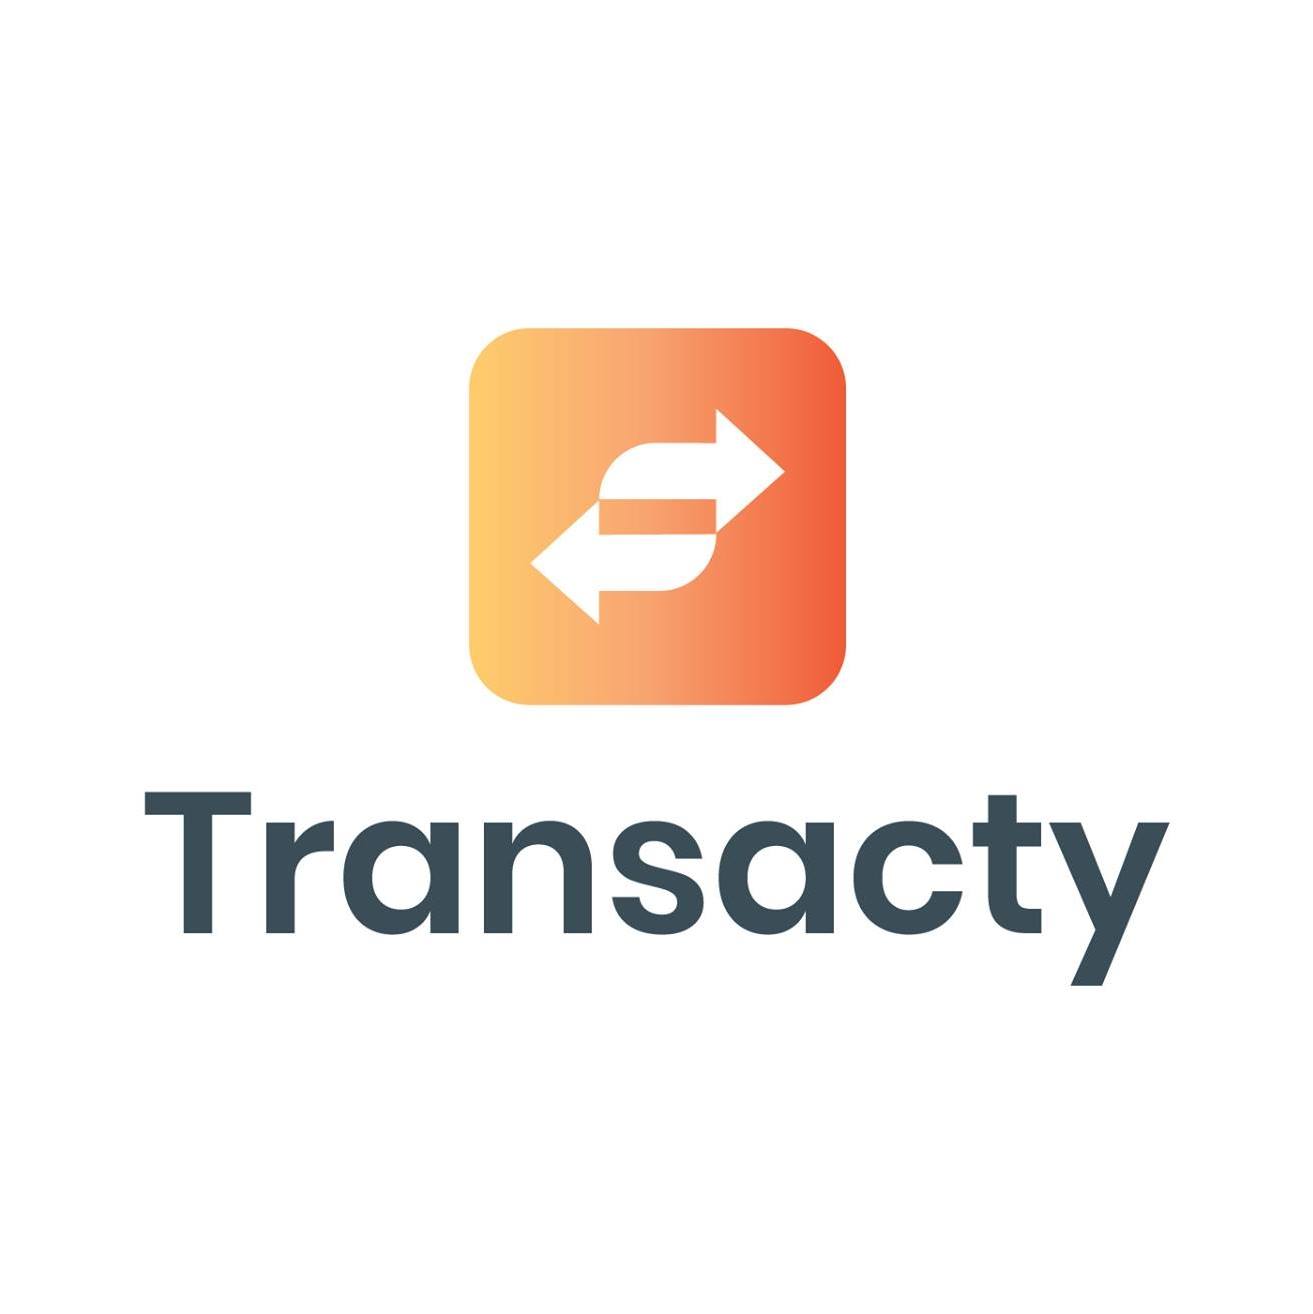 Transacty